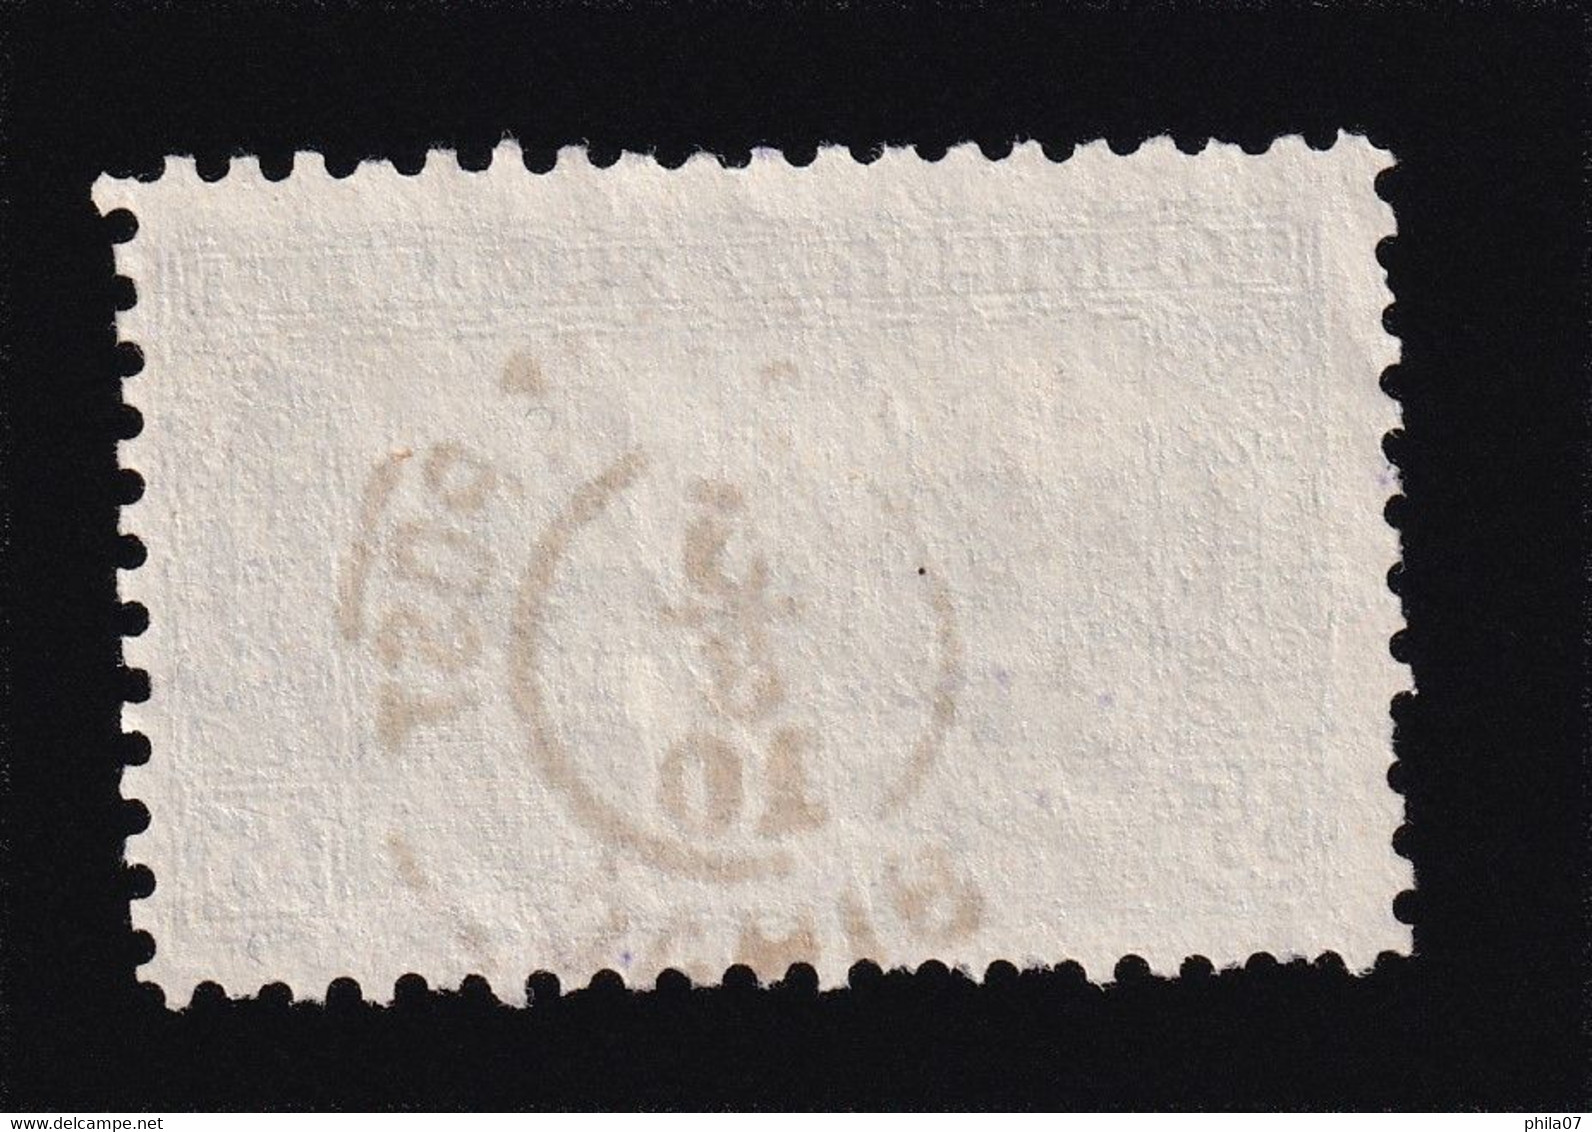 BOSNIA AND HERZEGOVINA - Landscape Stamp 35 Hellera, Perforation 9 ½, Stamp Cancelled - Bosnia And Herzegovina